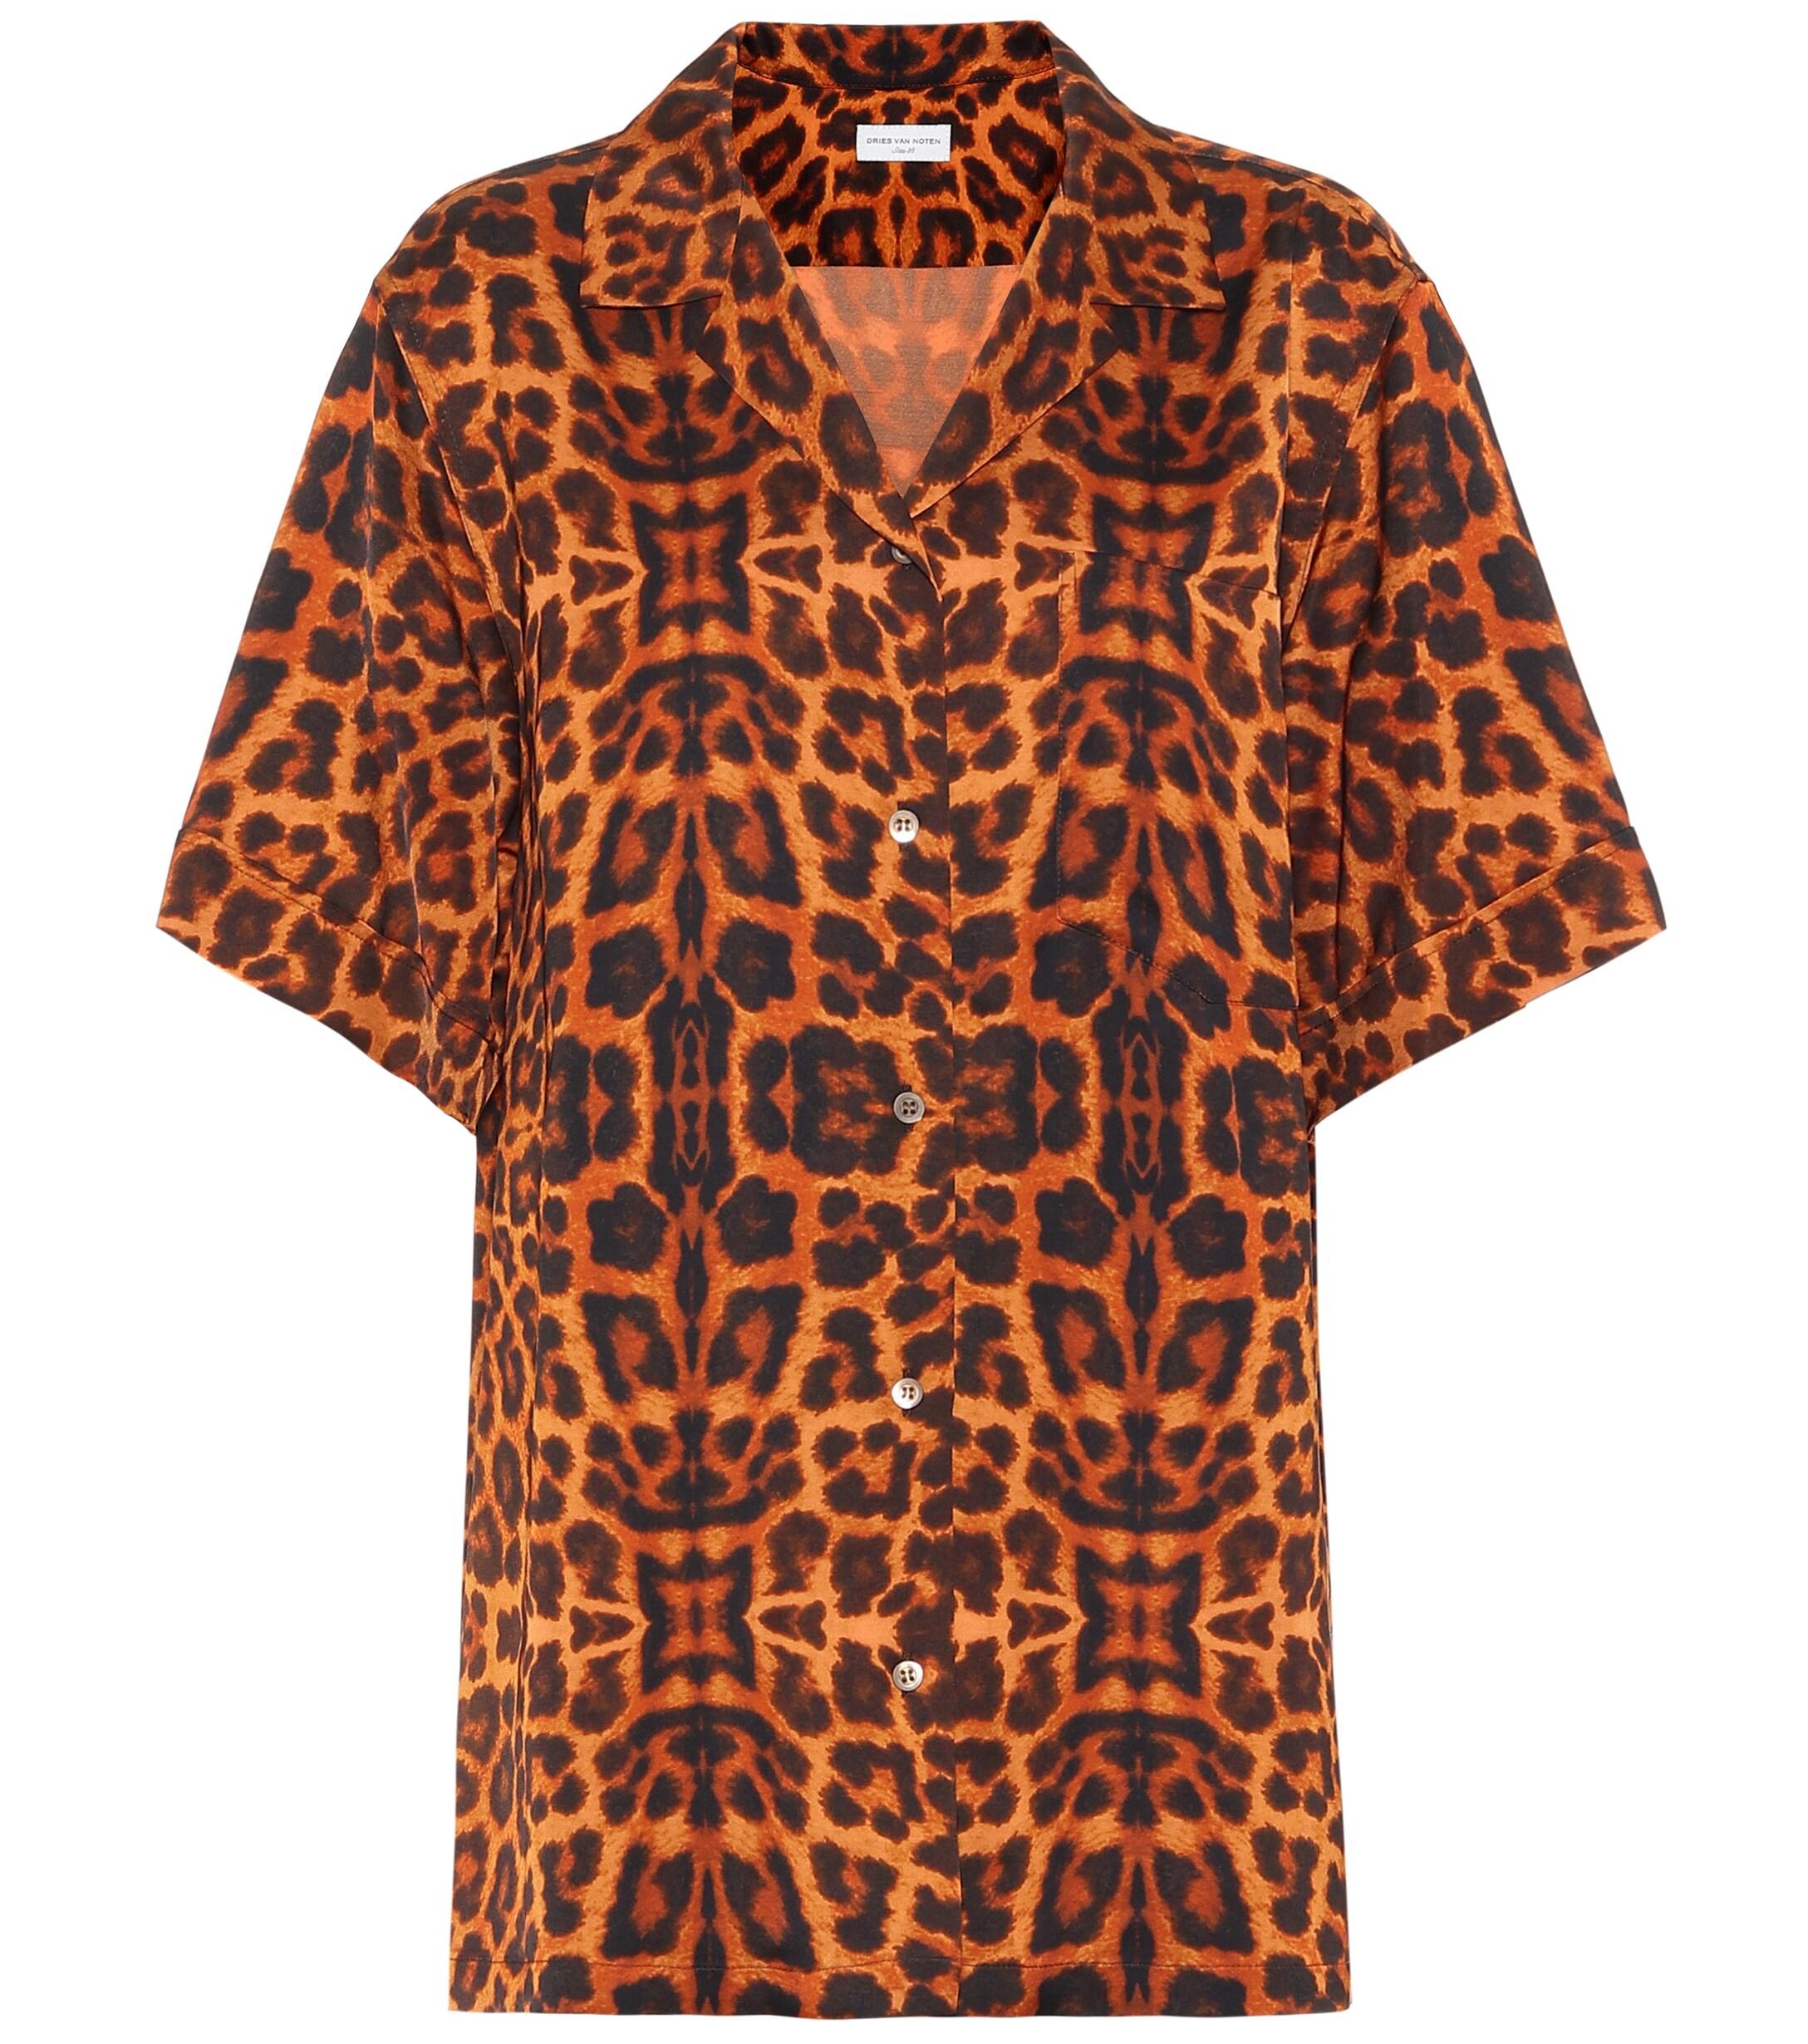 Dries Van Noten Leopard-printed Satin Shirt in Brown - Lyst